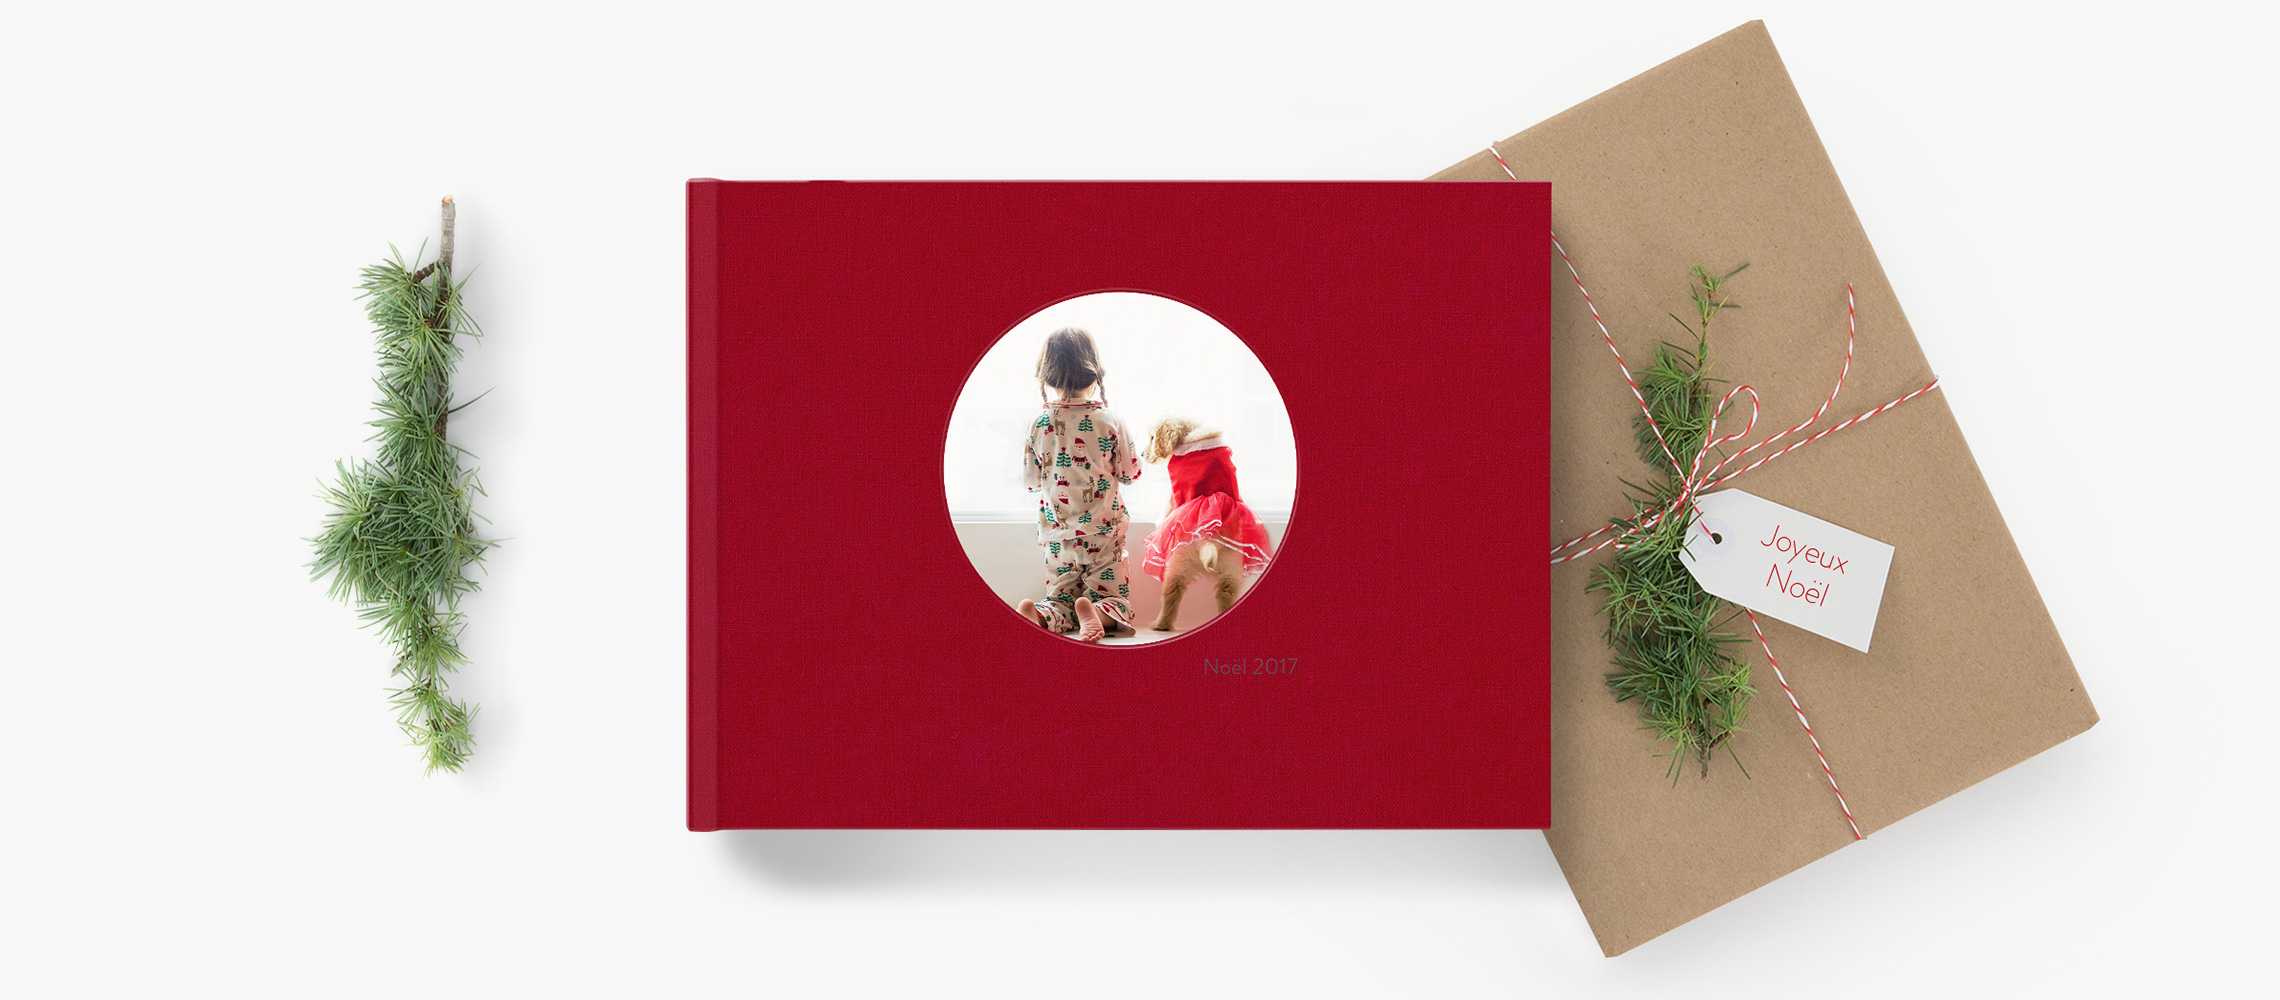 Christmas Photo Albums - Festive Photo Books - MILK Books